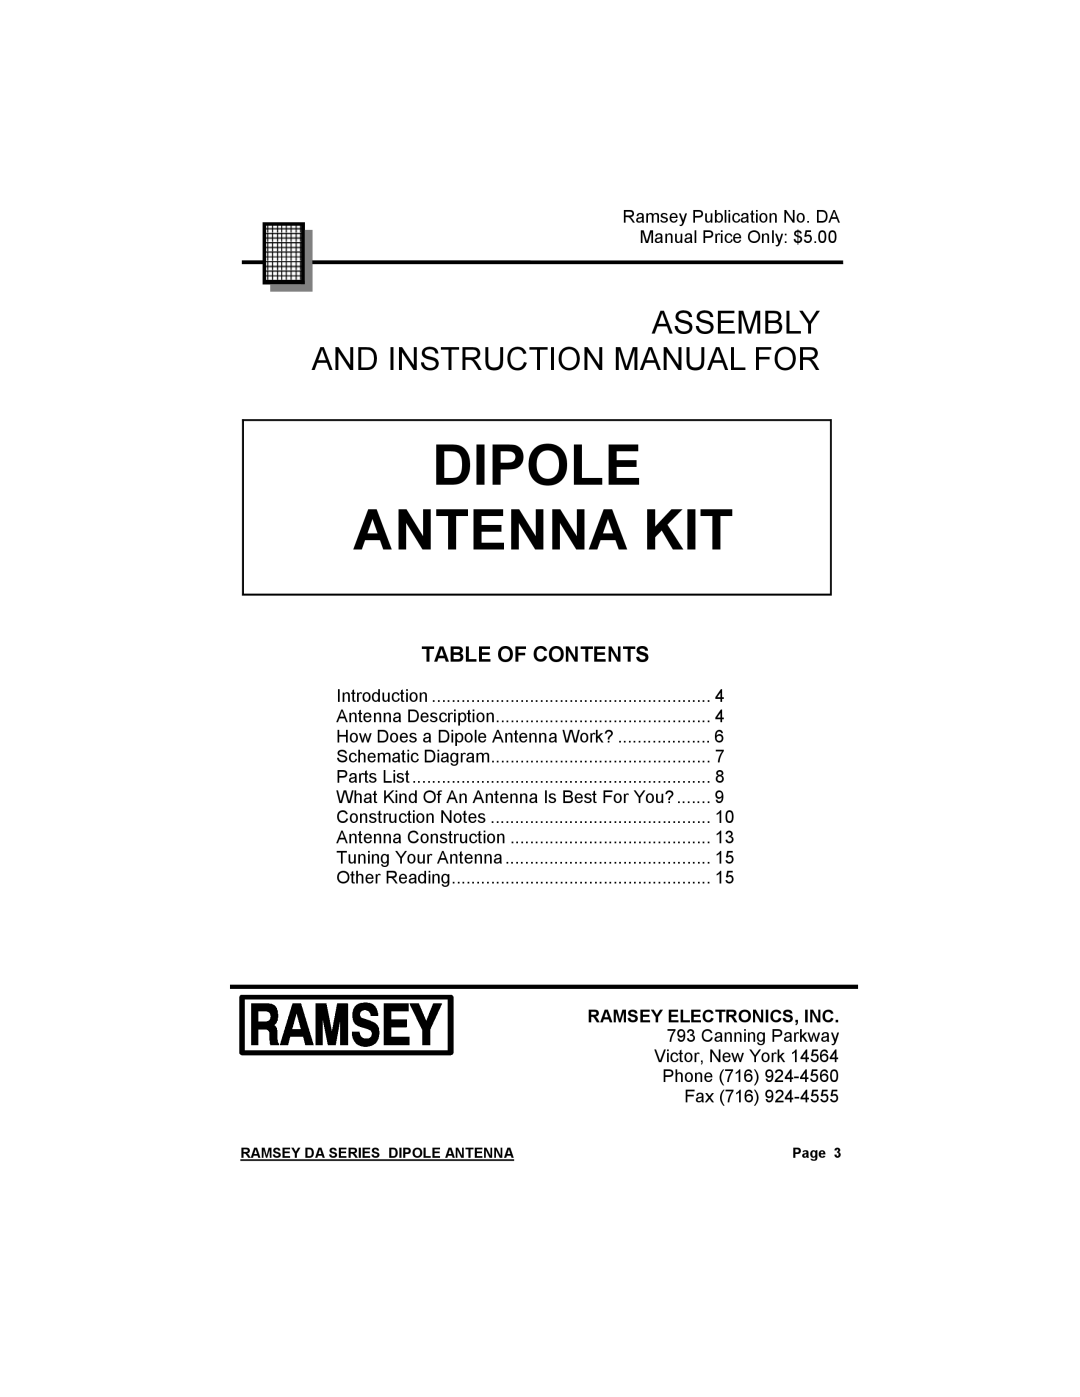 Ramsey Electronics DA-1 manual Dipole Antenna Kit, Table Of Contents 